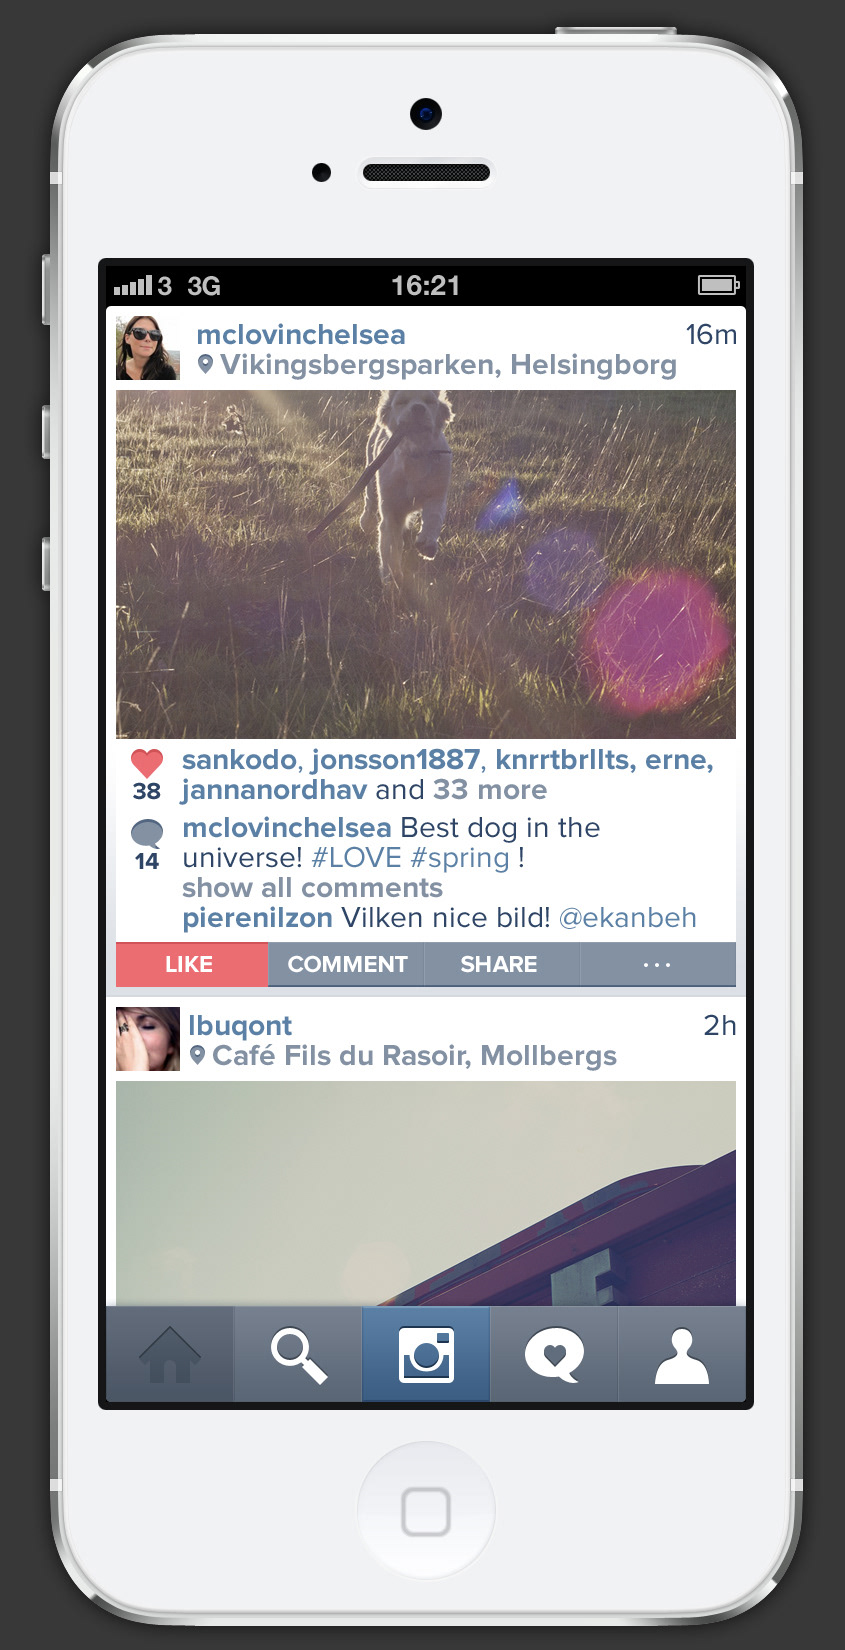 flat  UI  user interface  instagram  redesign  photoshop  app  design  iOS  iphone  FACEBOOK   follow insta